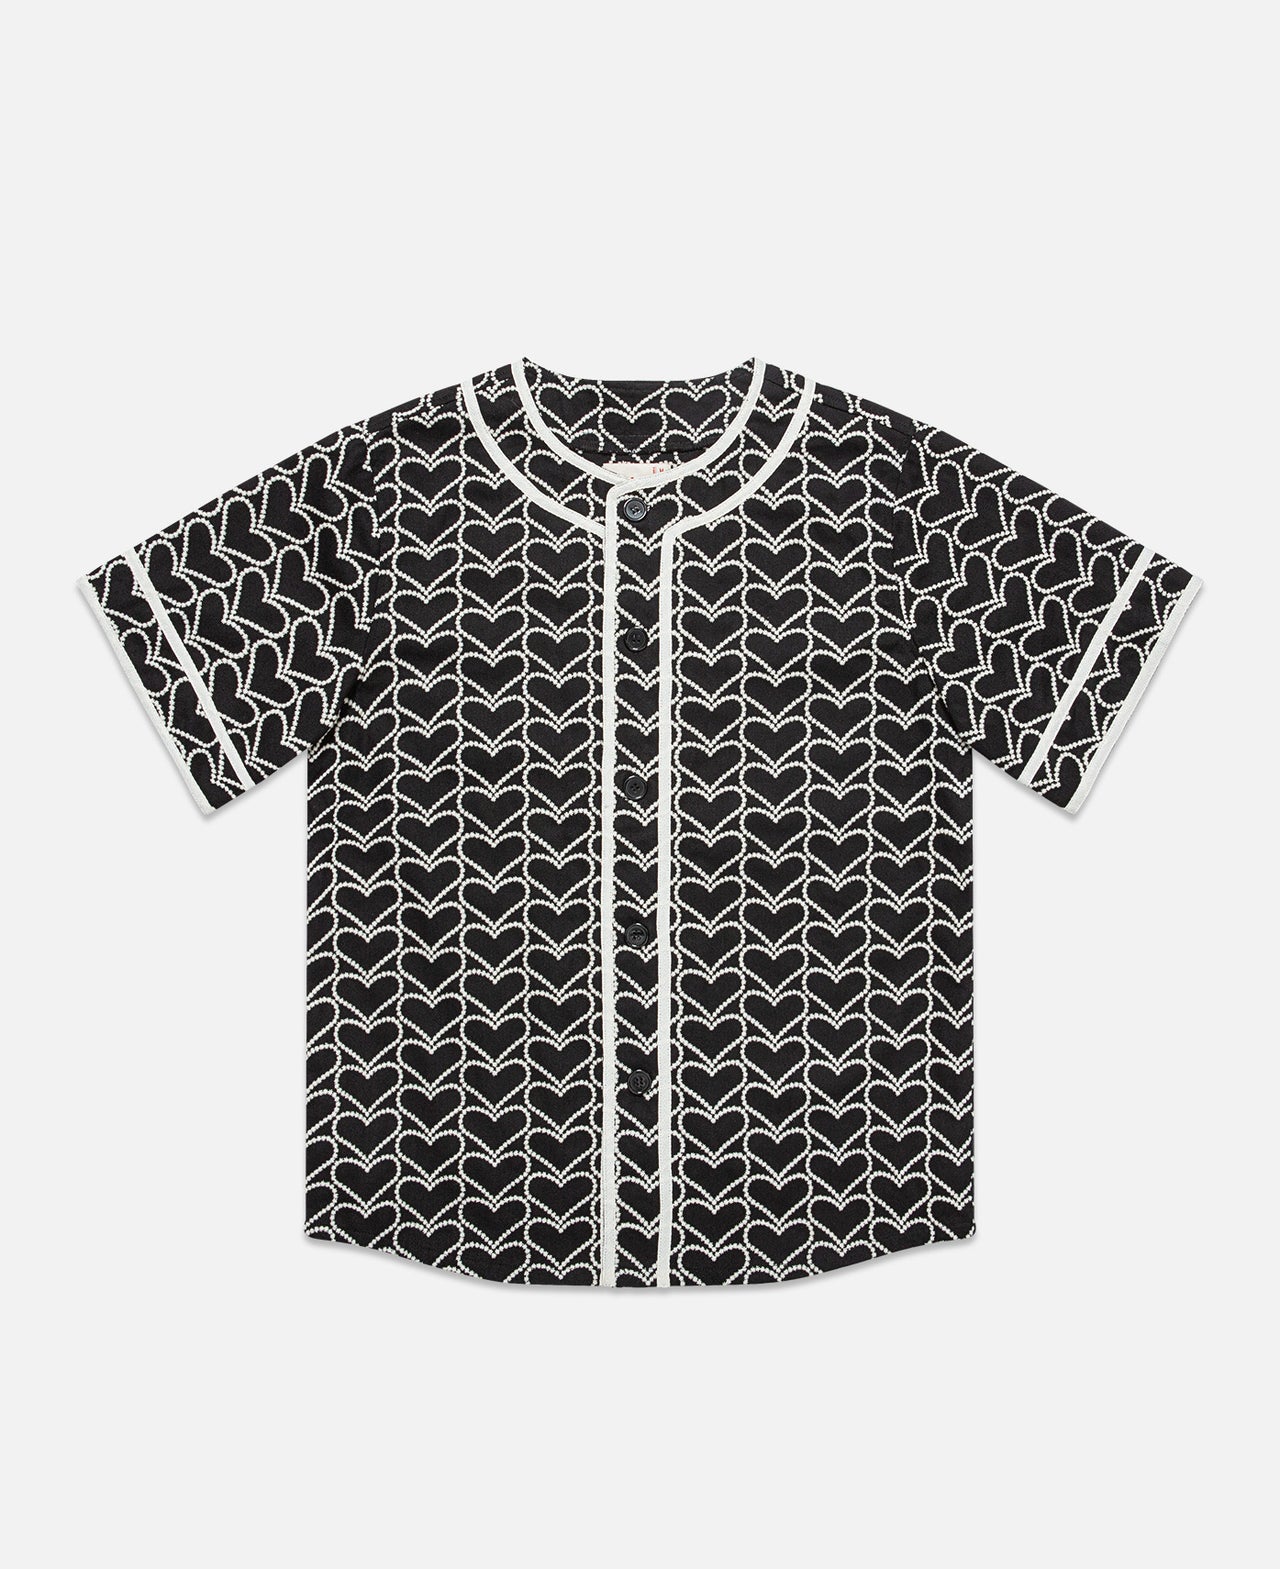 CLOT x Emotionally Unavailable Baseball Shirt - Black/White